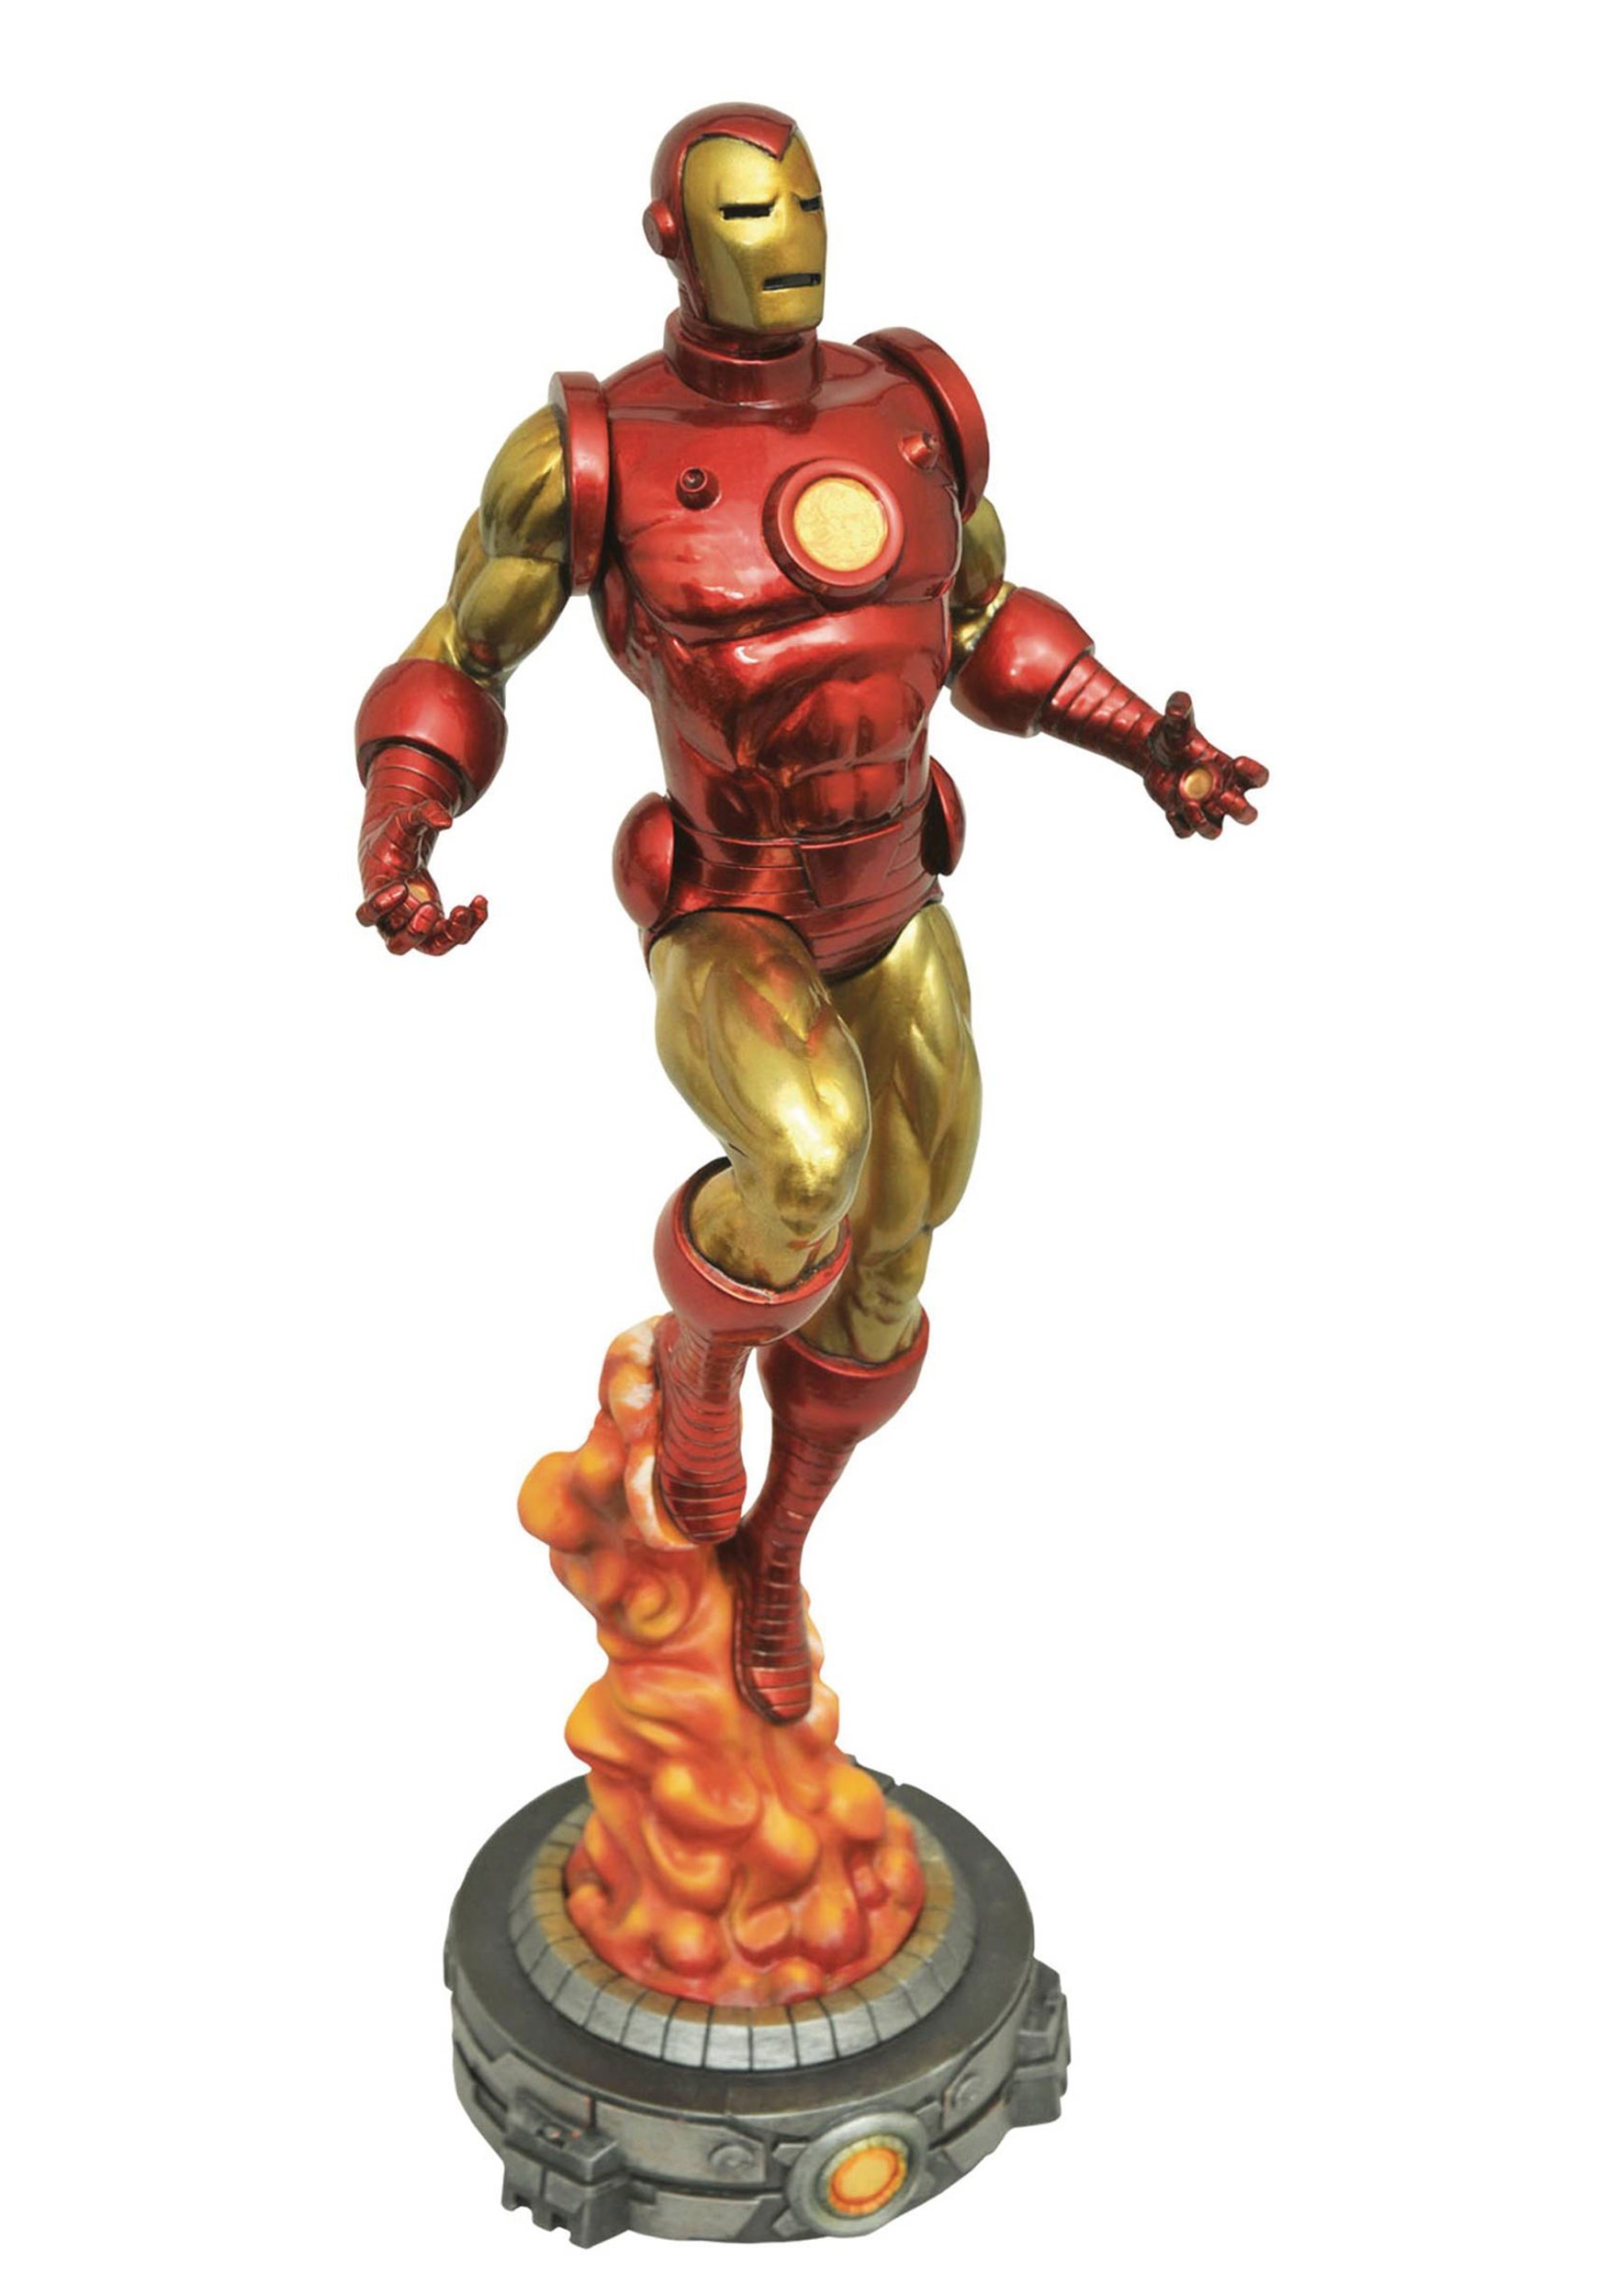 Marvel Gallery Bob Layton Iron Man PVC Figure